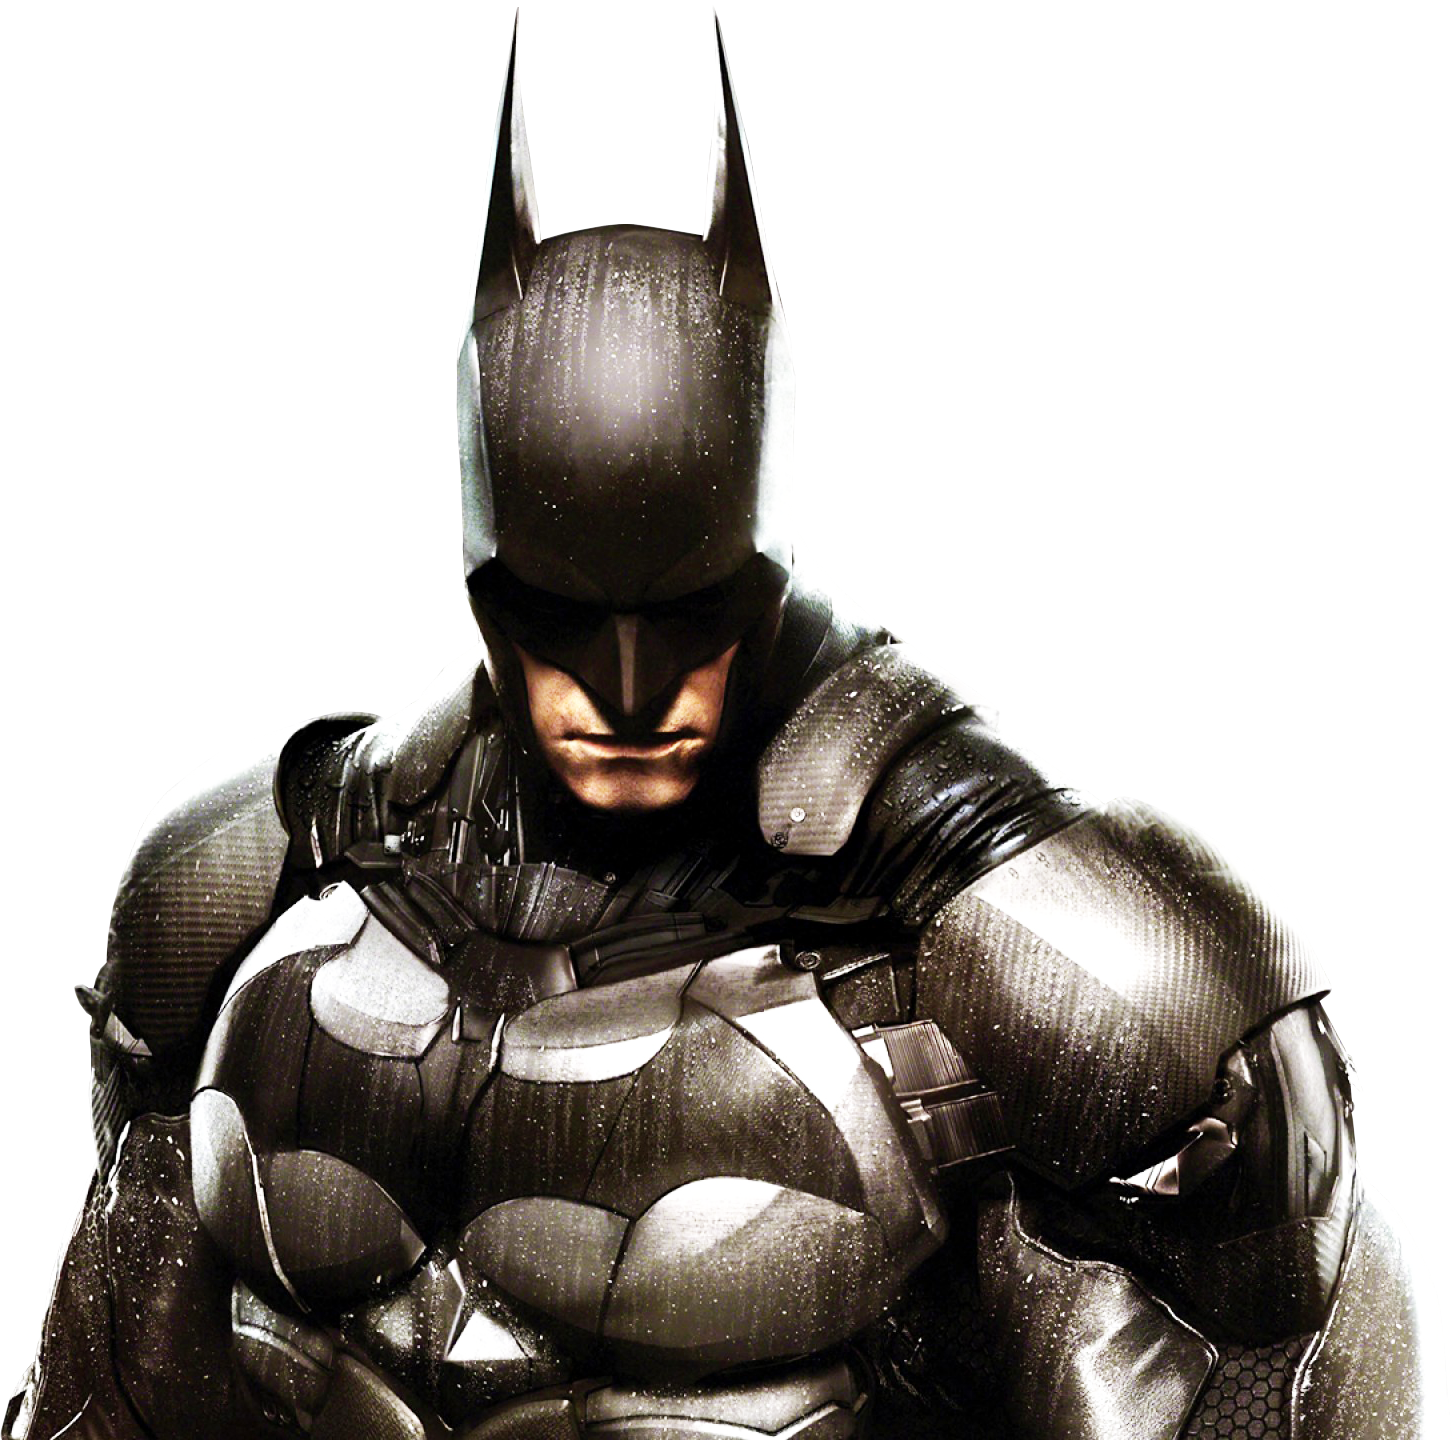 Batman The Dark Knight Logo @